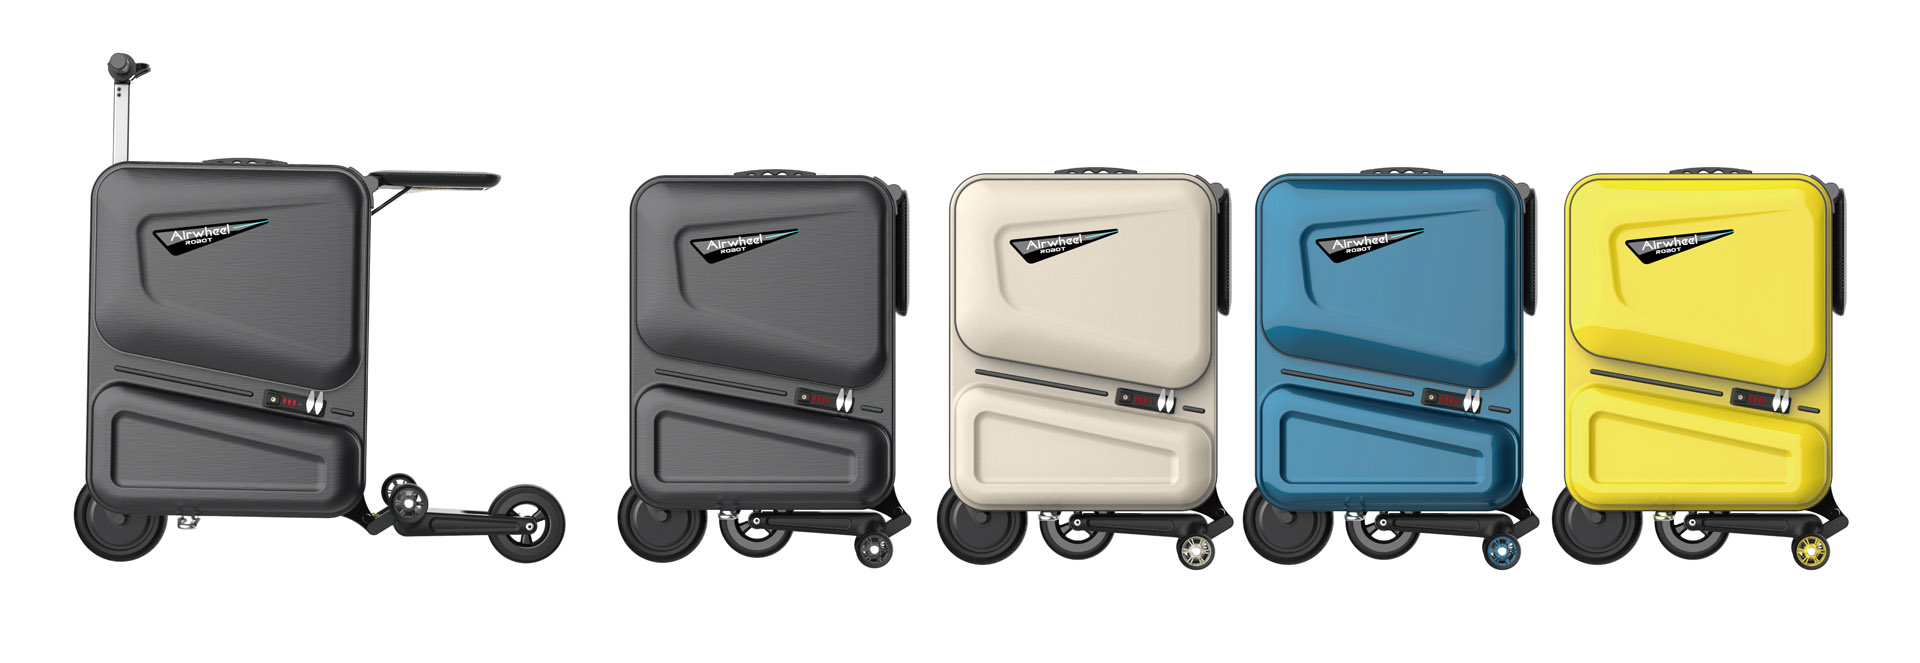 airwheel se3-T4 riding luggage